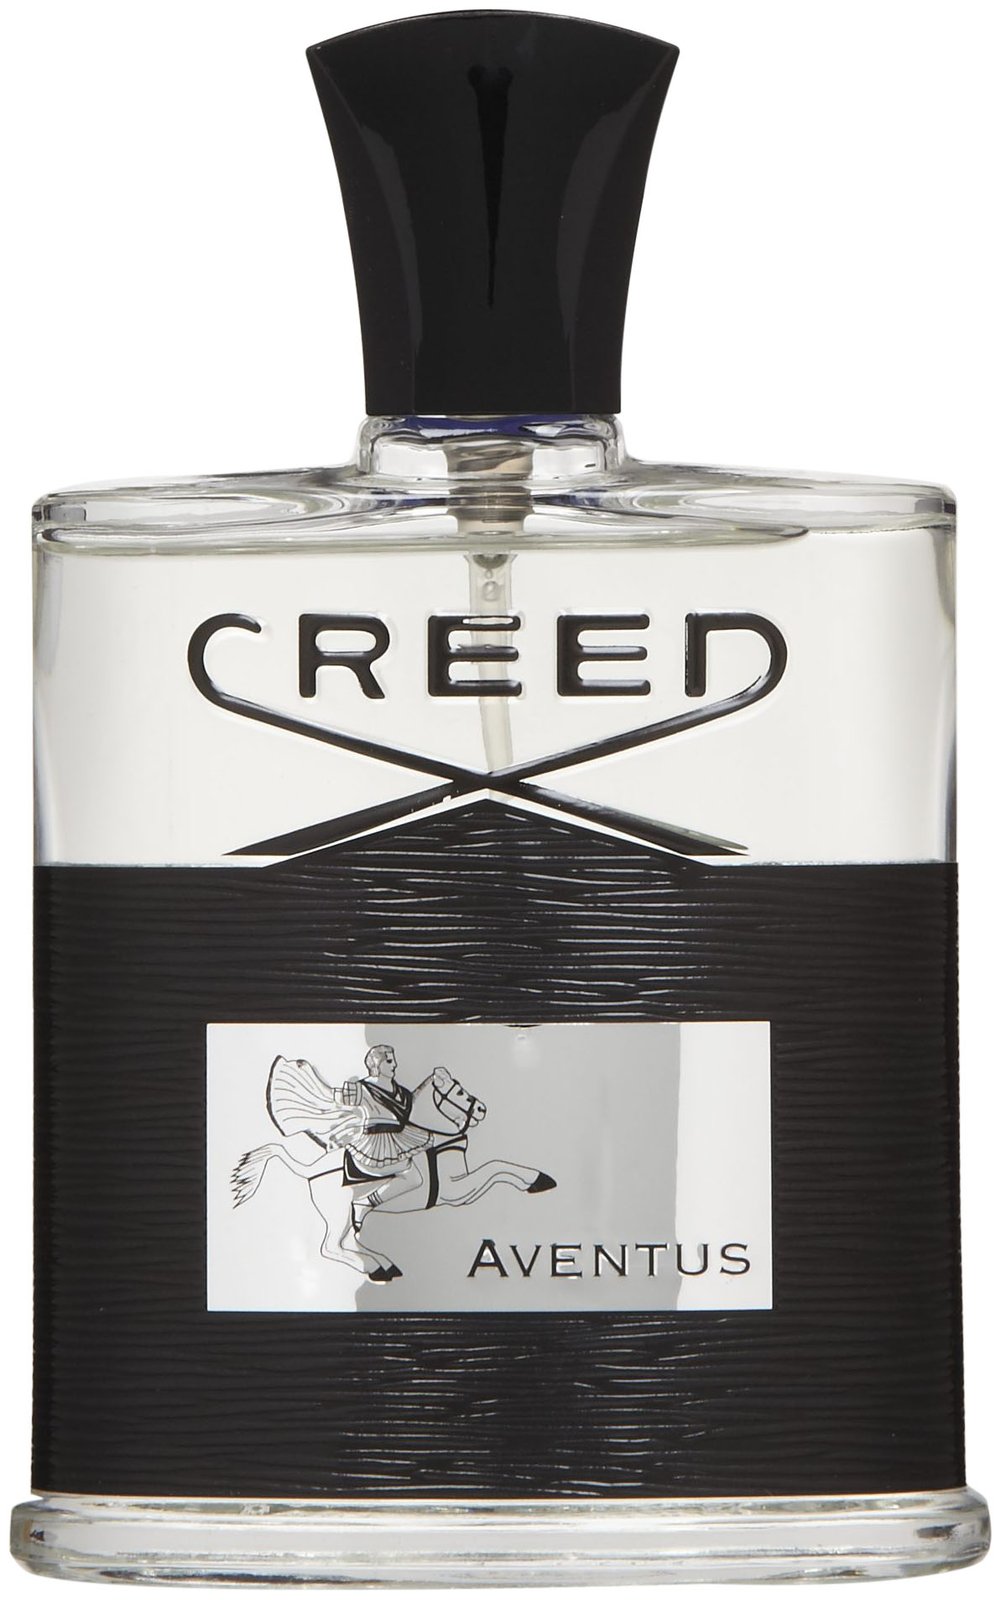 Creed 'Aventus' Fragrance, $190-$380